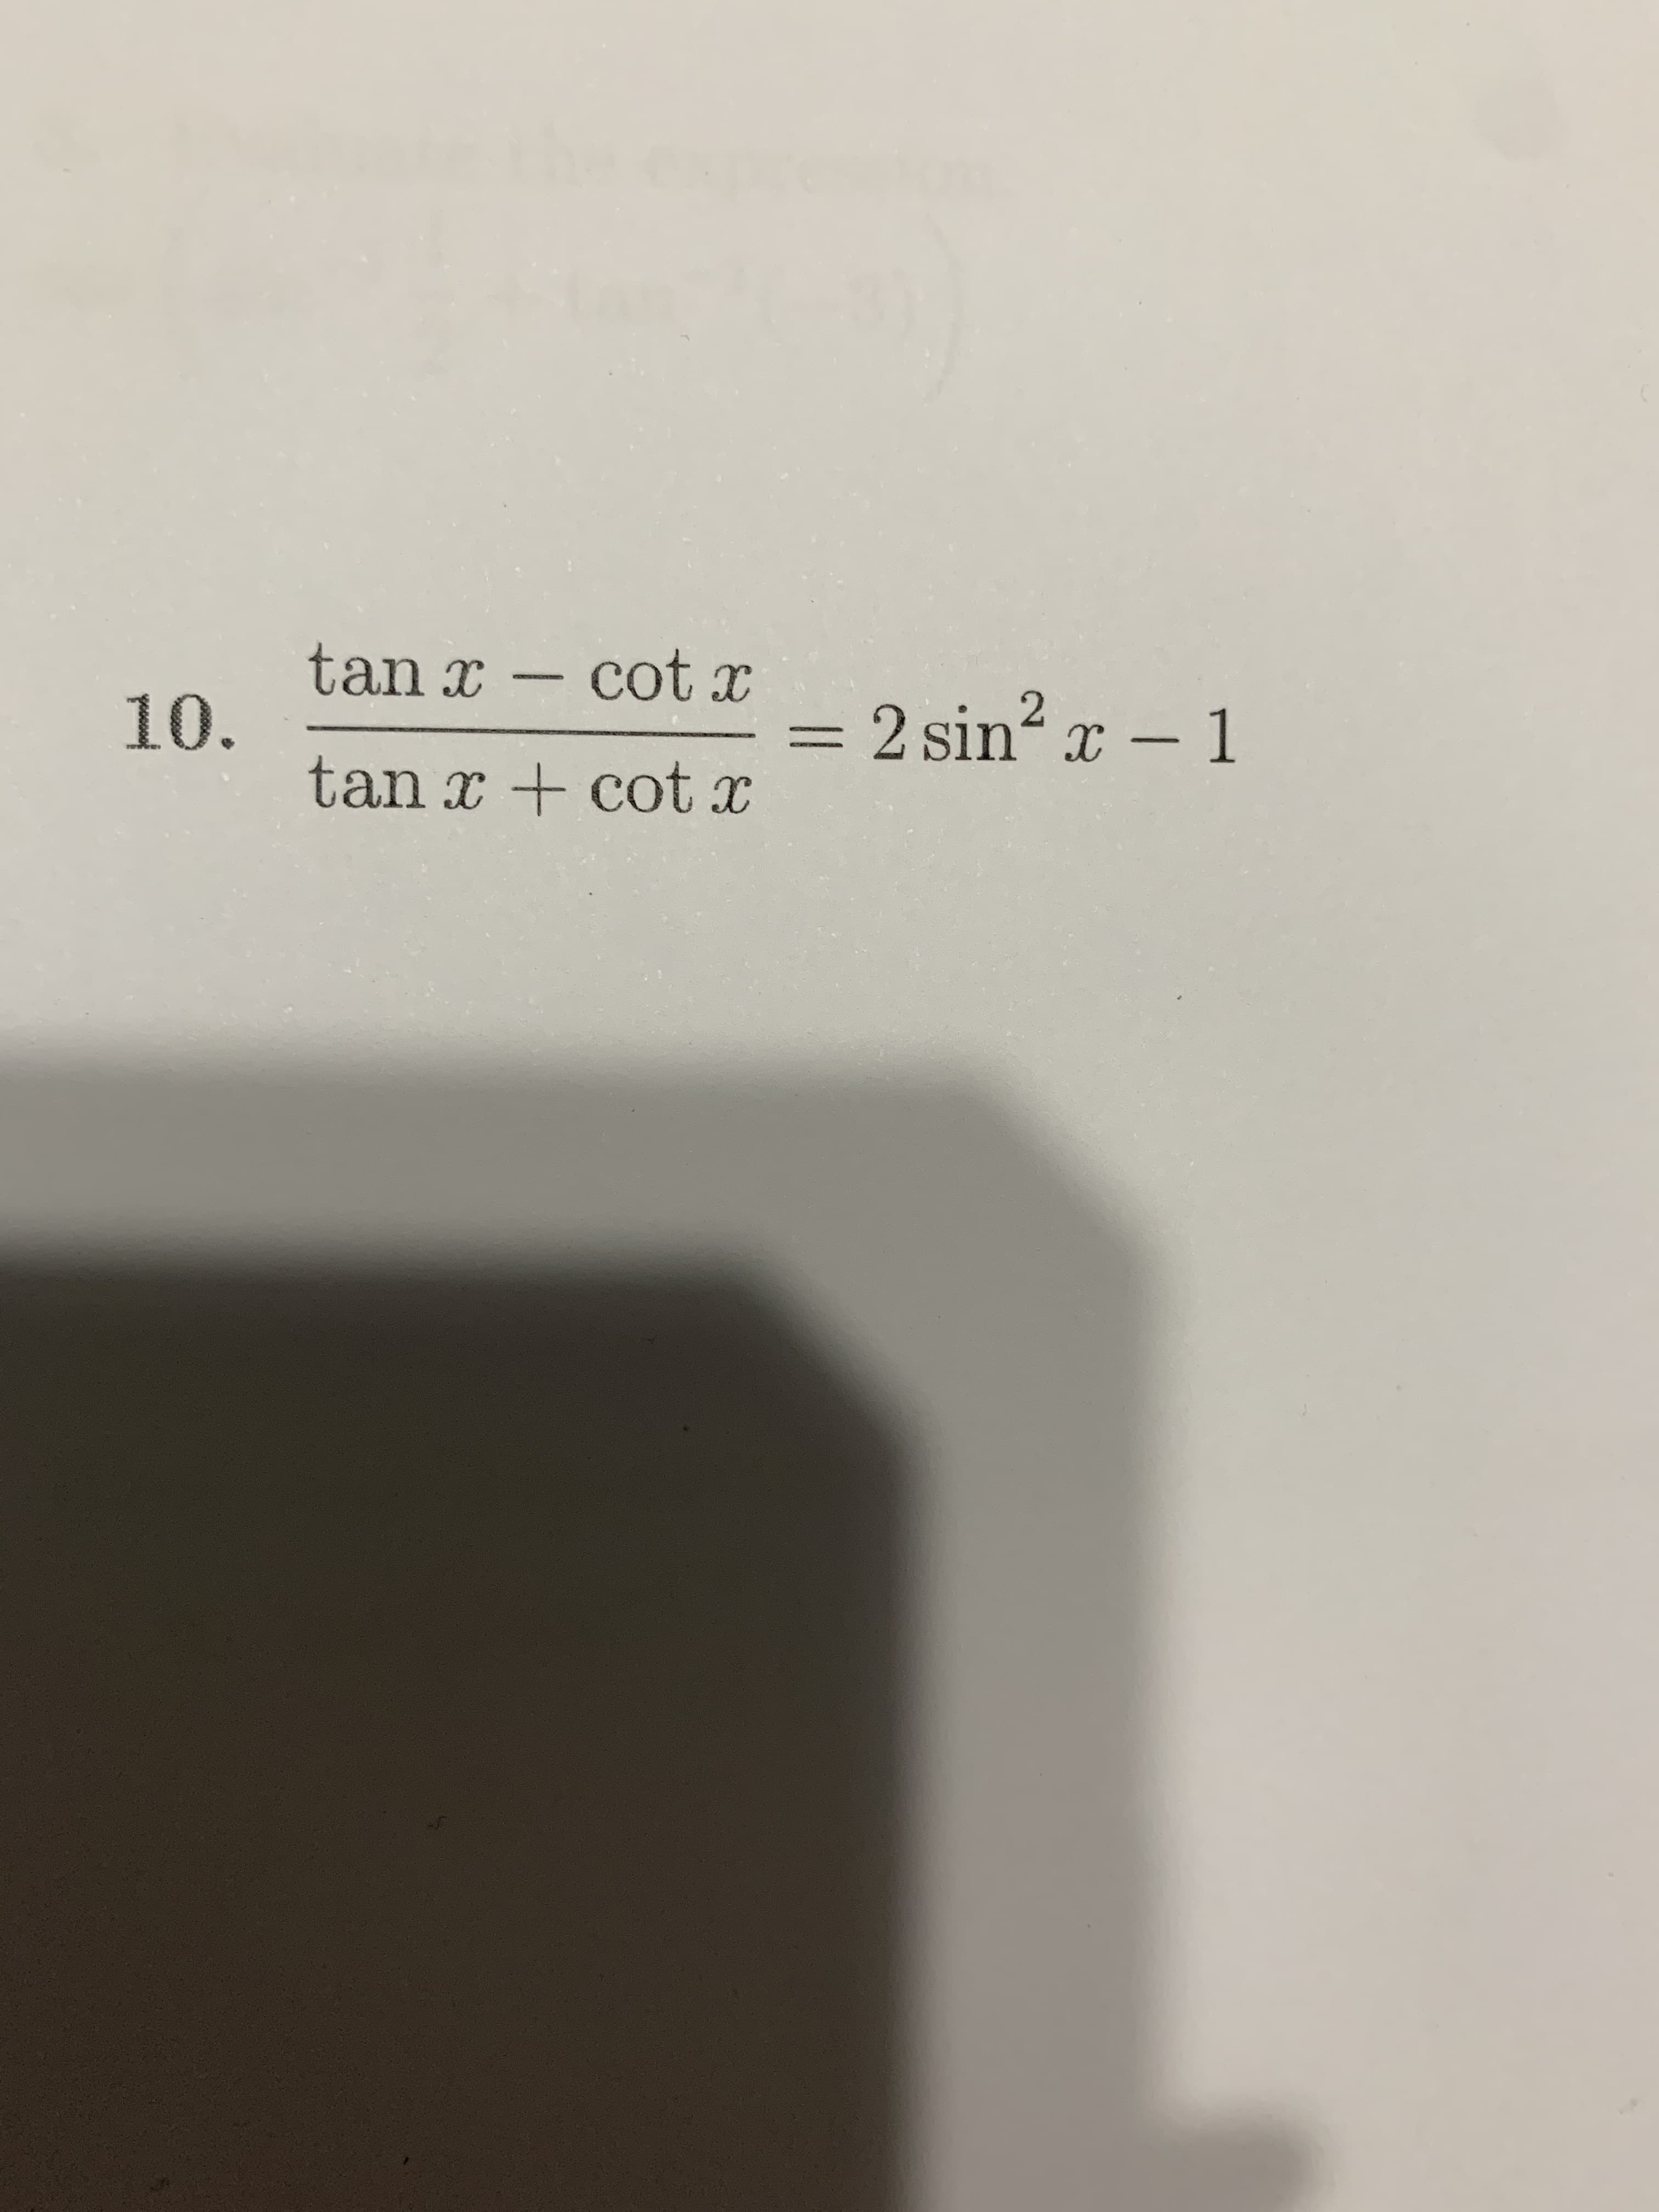 cot r
= 2 sin2 x - 1
10.
tan x
cot x
